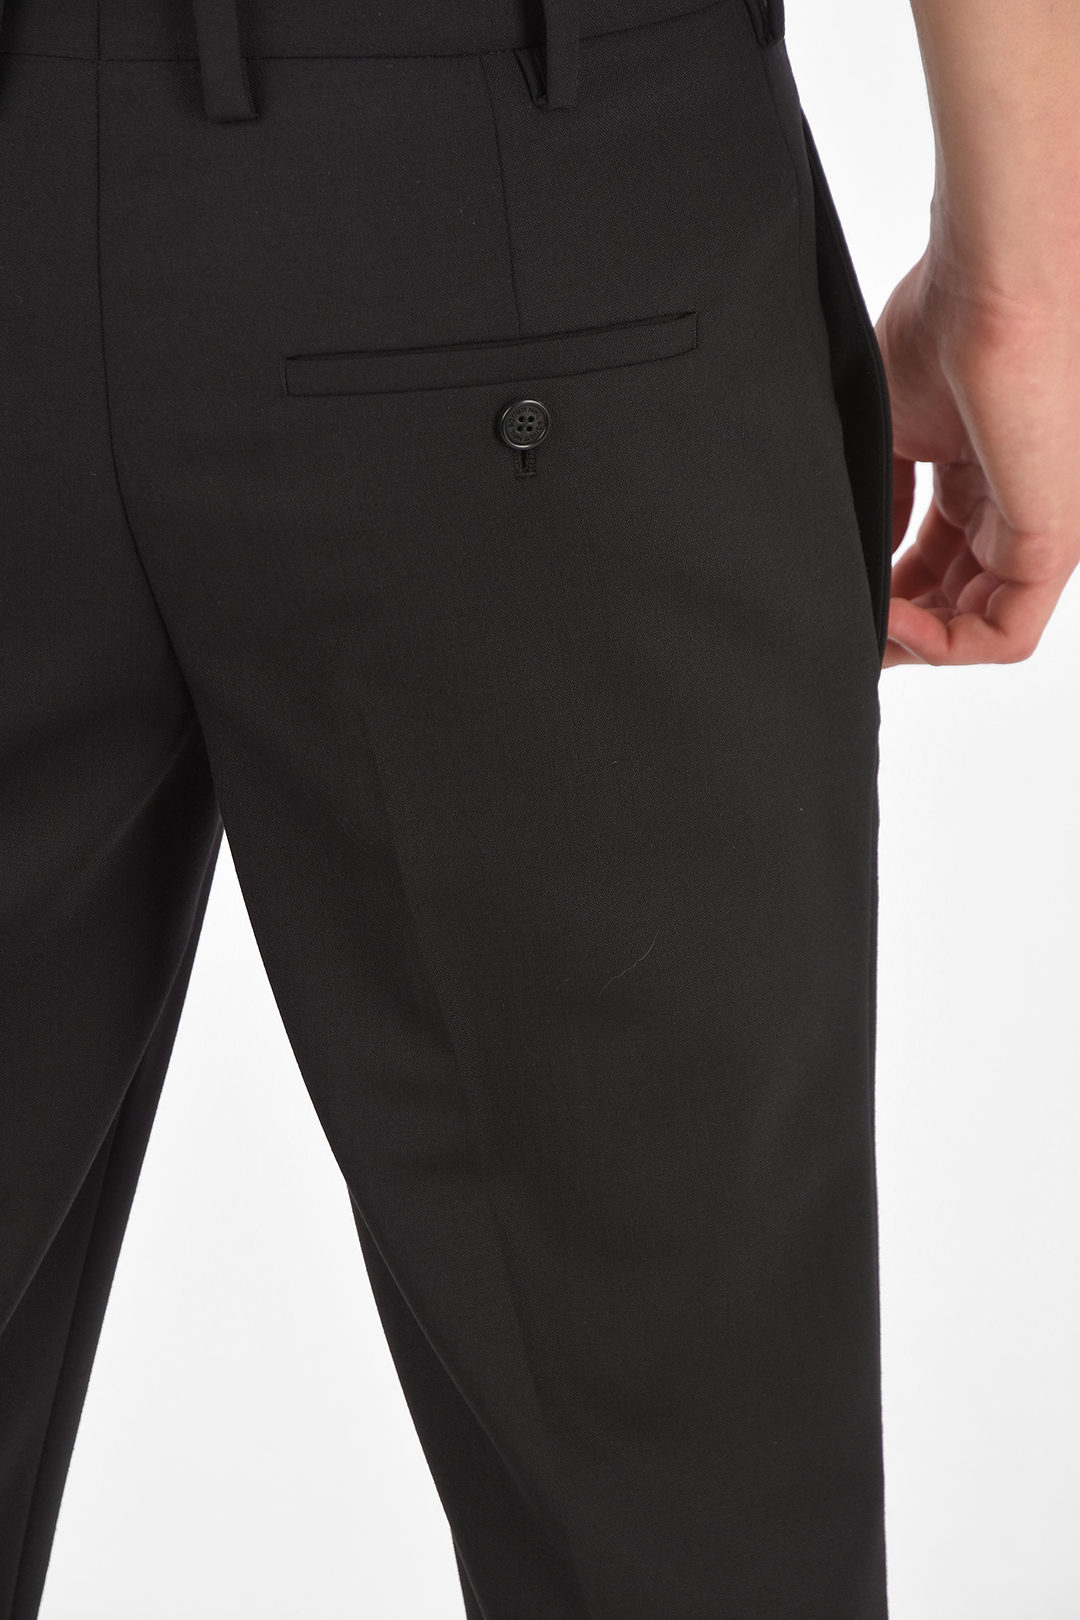 Mens Cargo Trousers 2 in 1 Zip Off 3/4 Shorts Open Hem Bottoms Zip Pockets  M-3XL | eBay